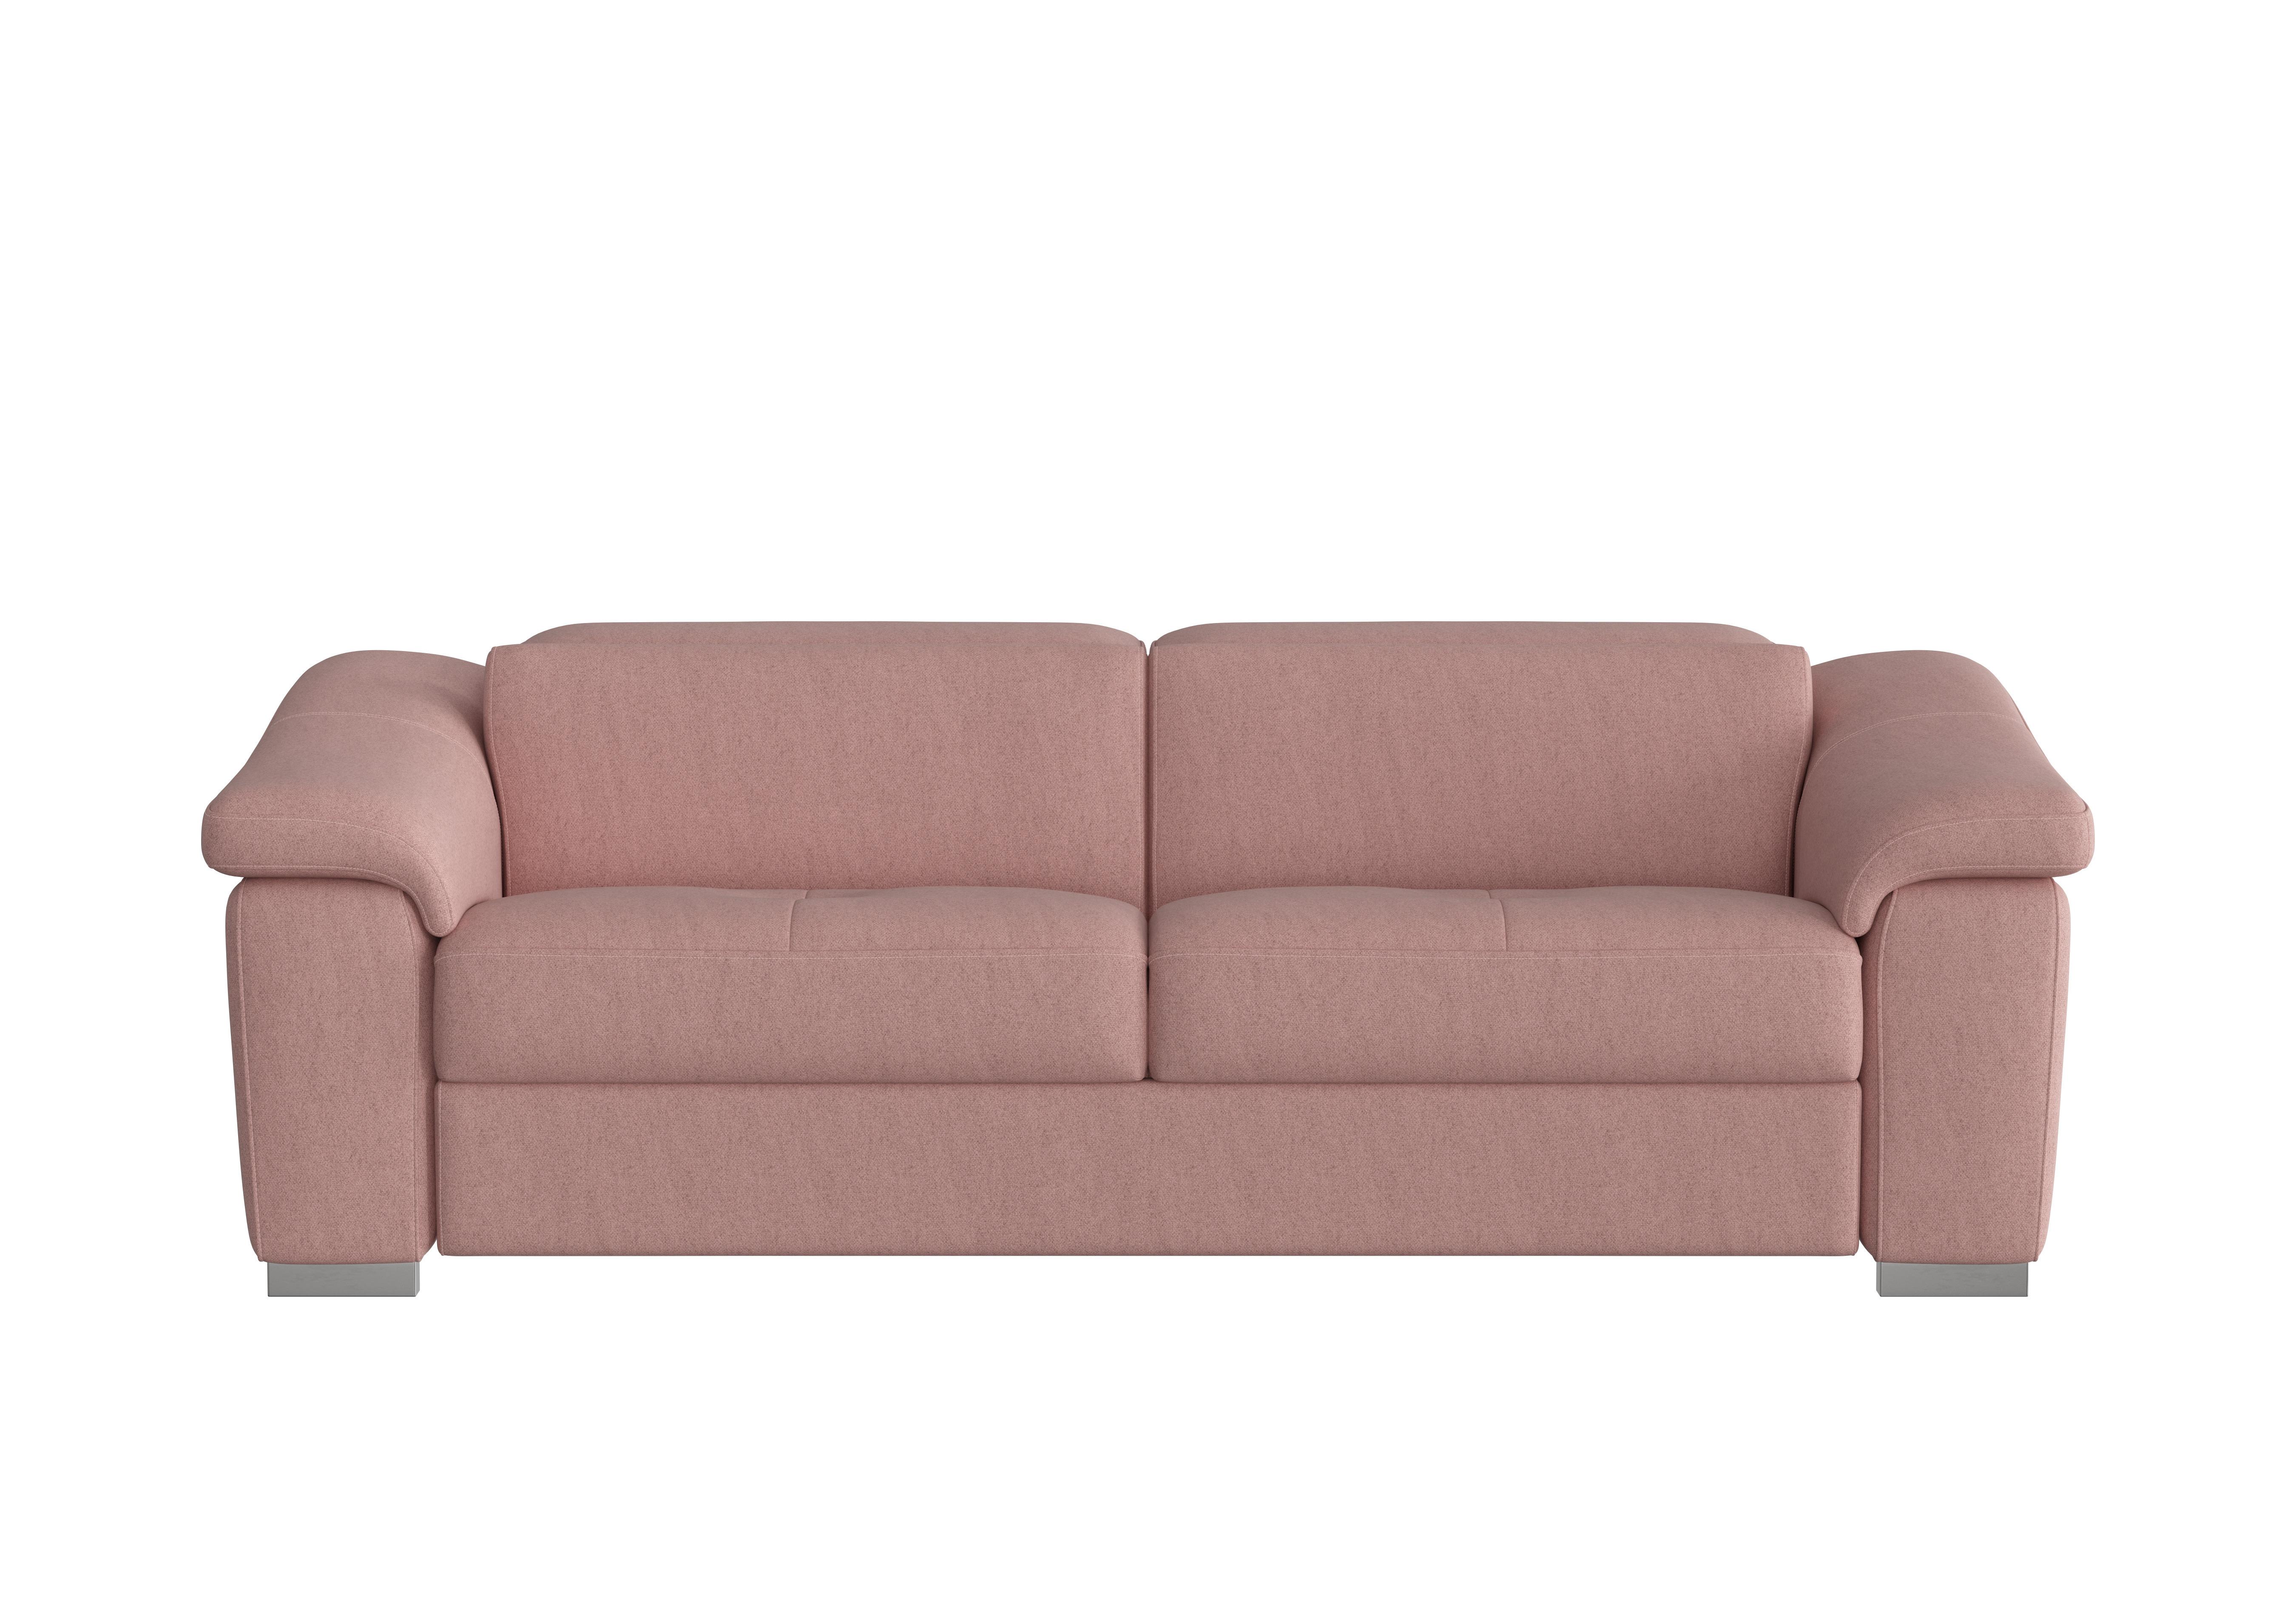 Galileo 3 Seater Fabric Sofa in Fuente Coral Ch on Furniture Village